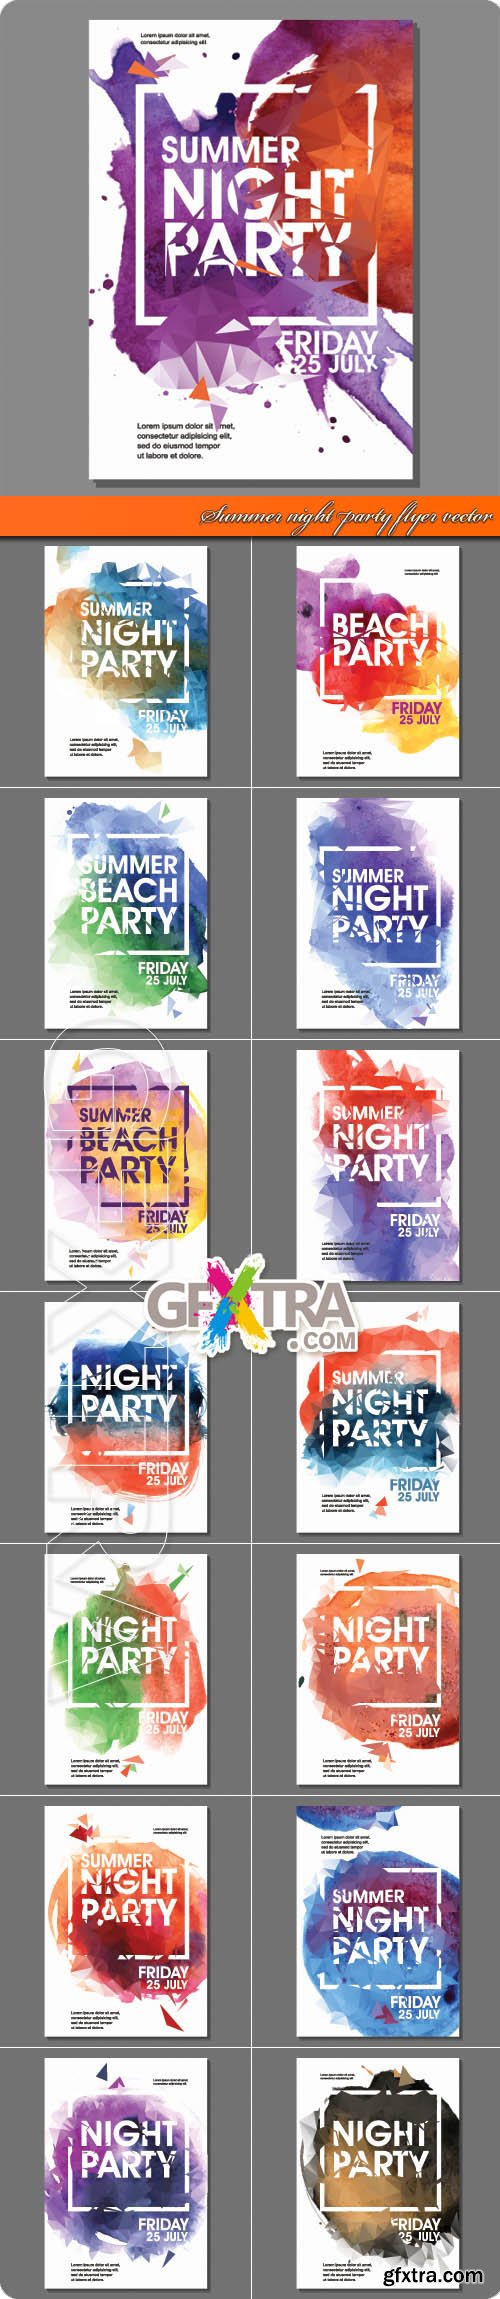 Summer night party flyer Vector